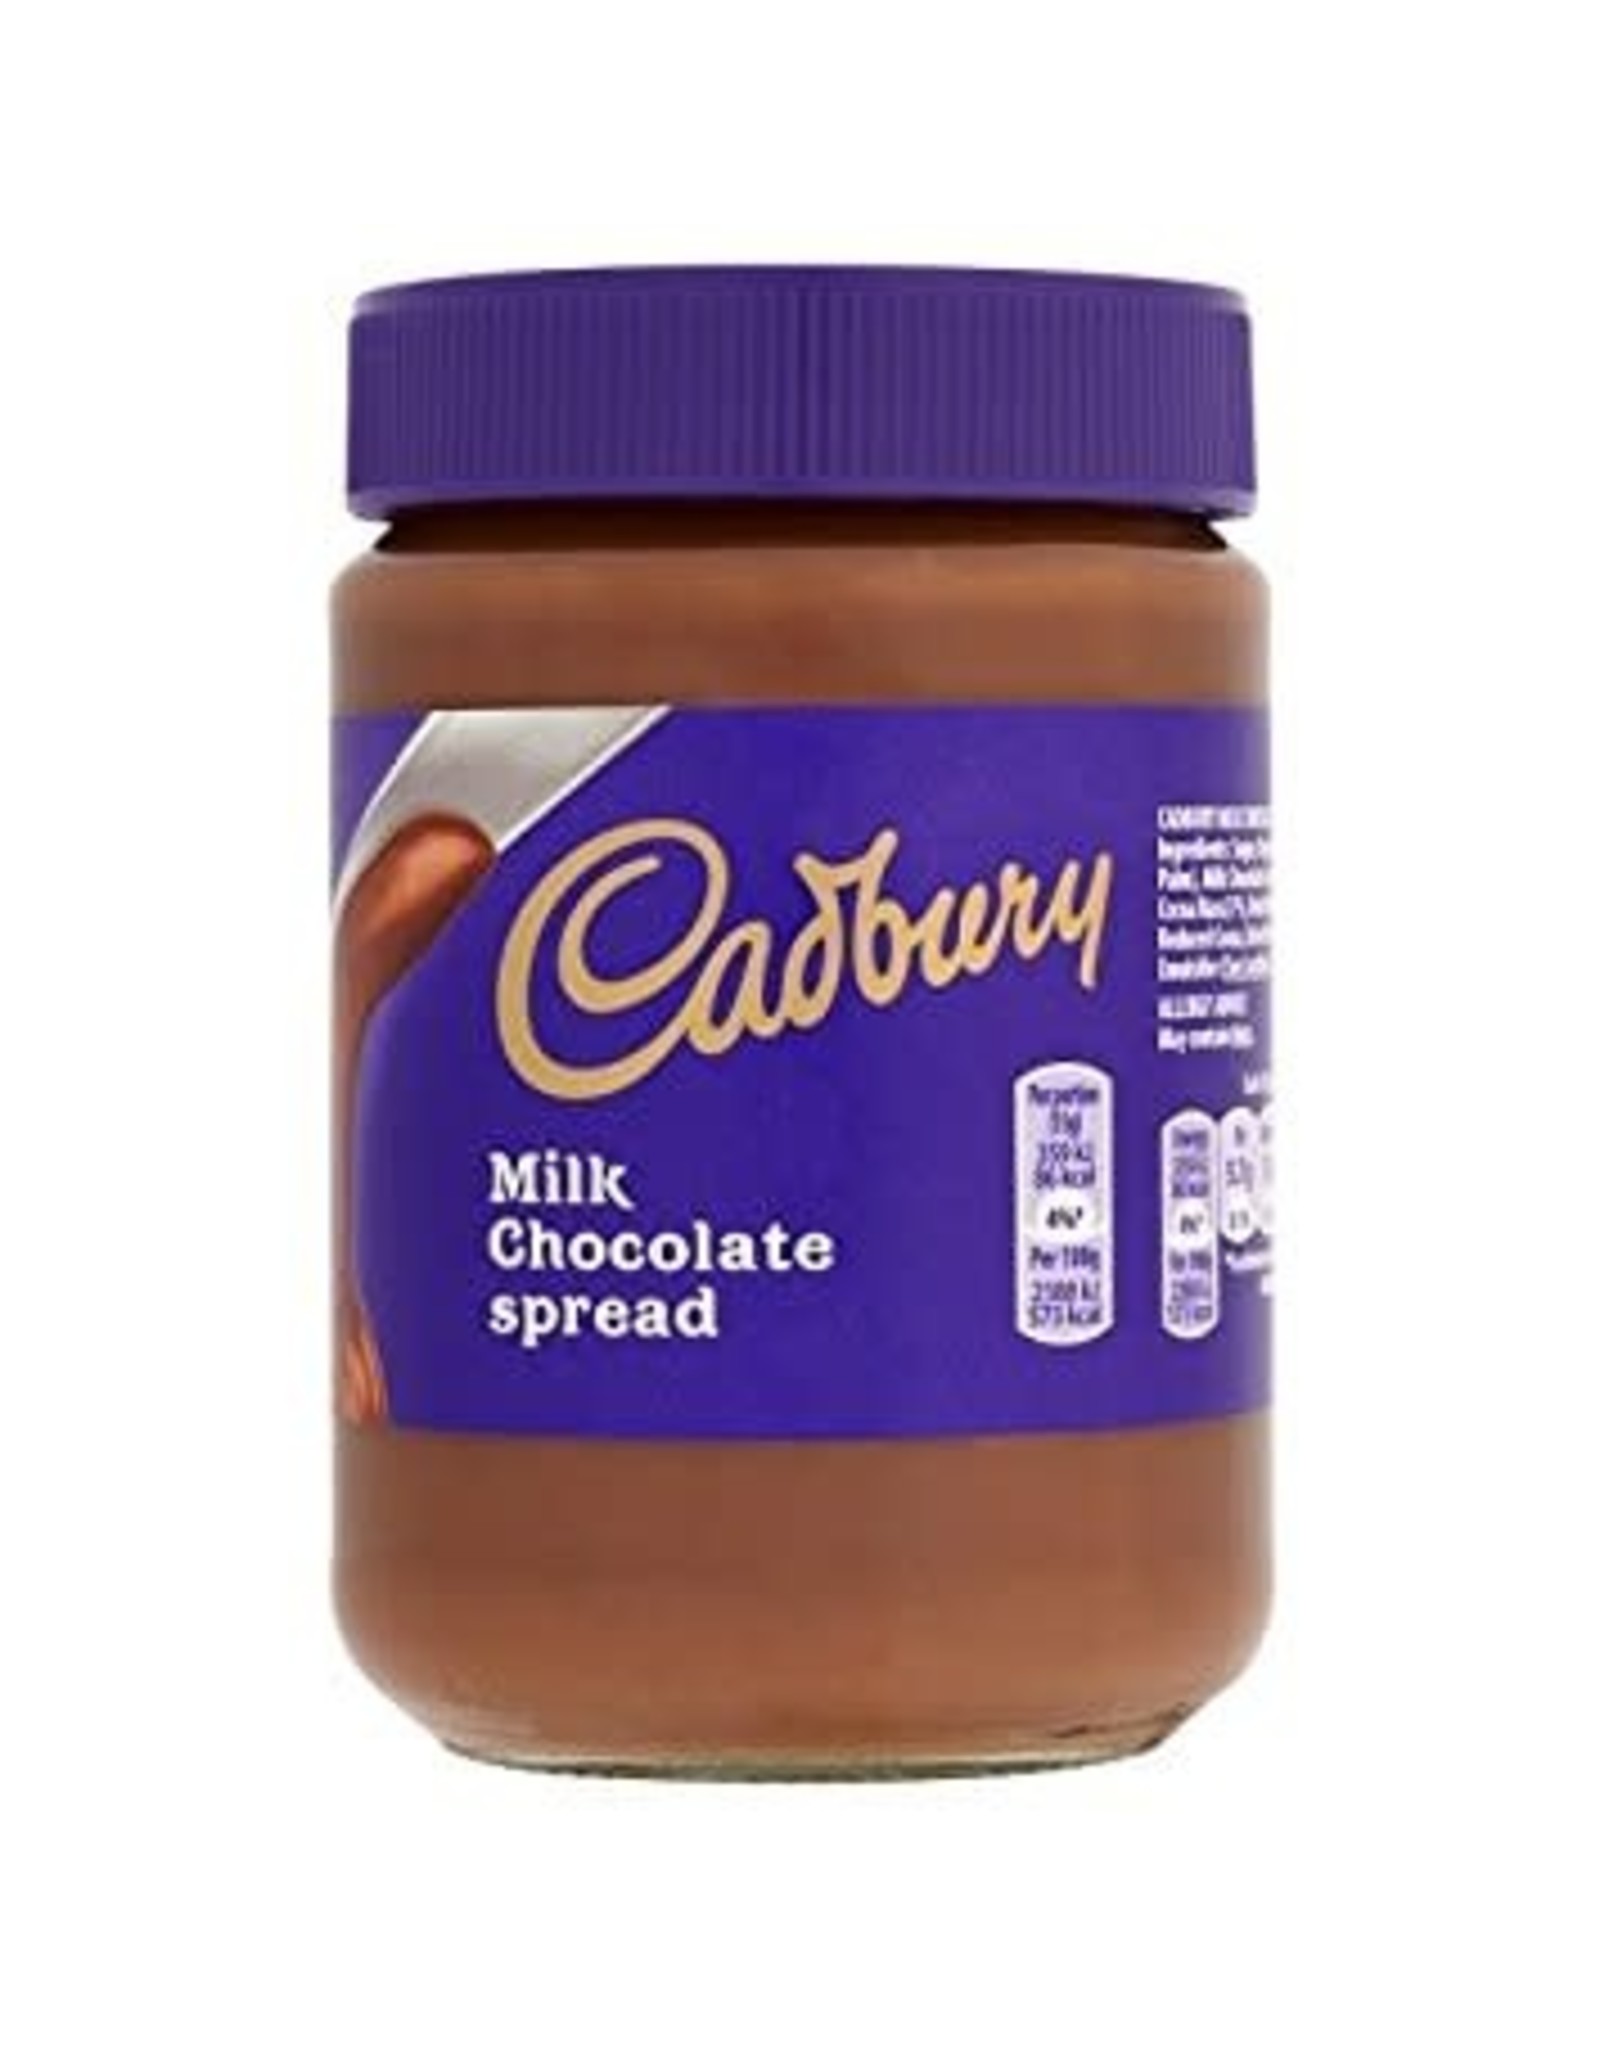 Cadbury Cadbury Chocolate Spread (British)